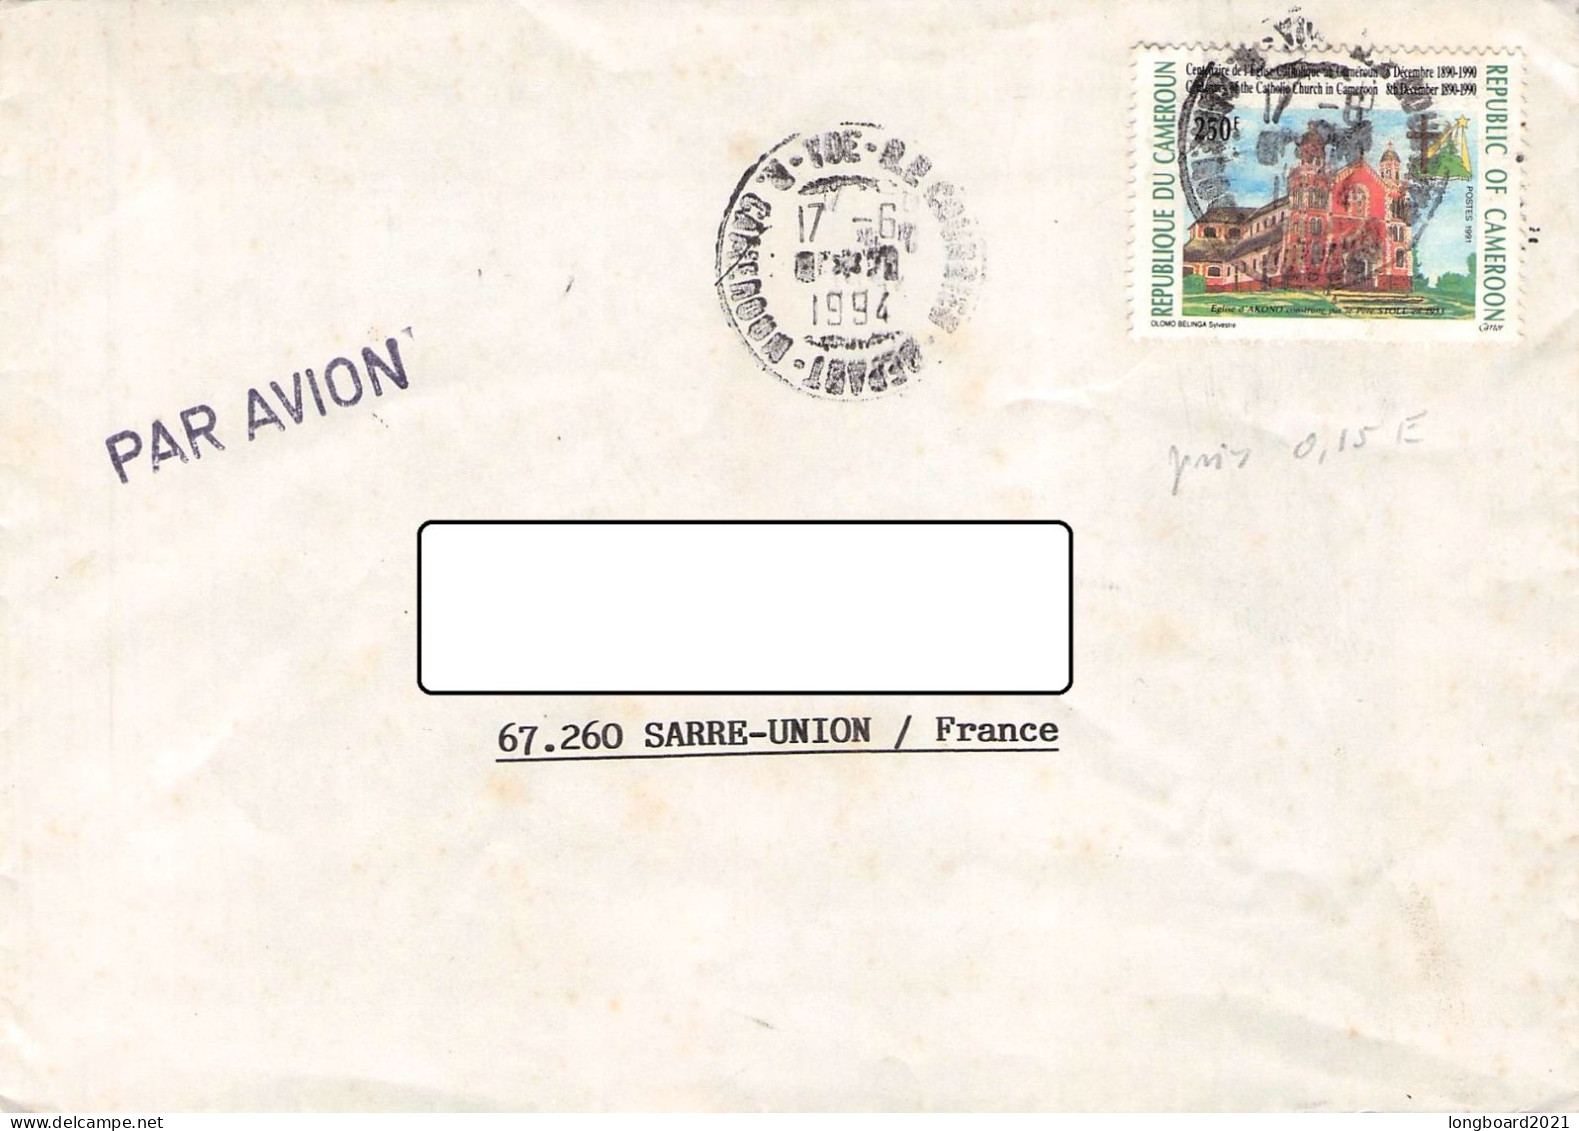 CAMEROON - AIRMAIL 1994 - SARRE UNION/FR /4518 - Kamerun (1960-...)